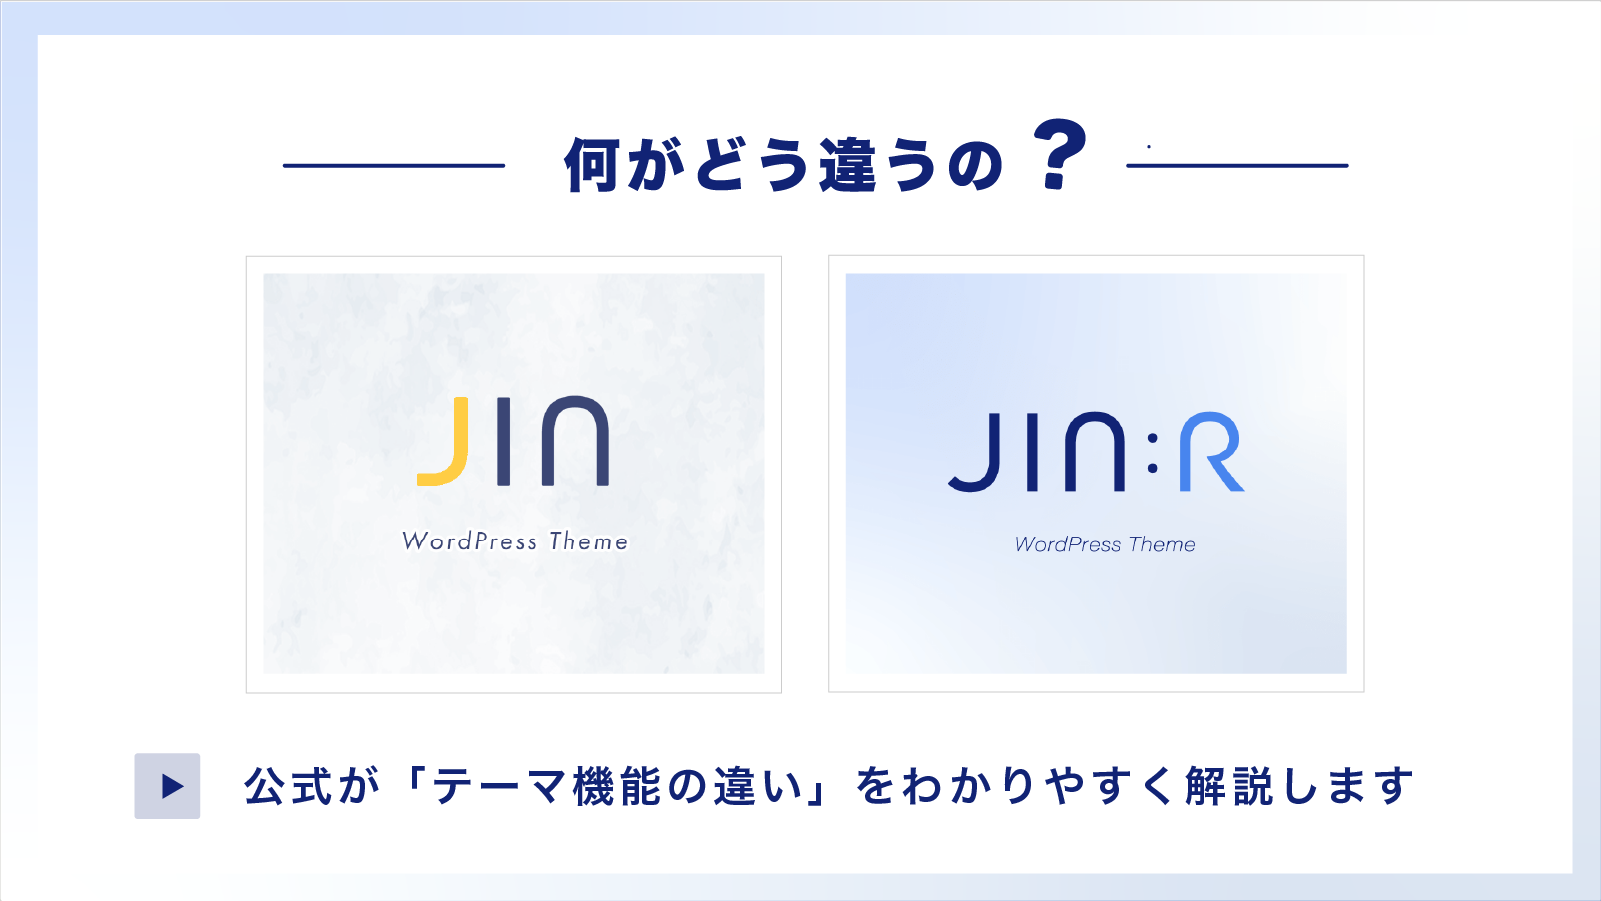 WordPressテーマ JINとJIN:Rの違い